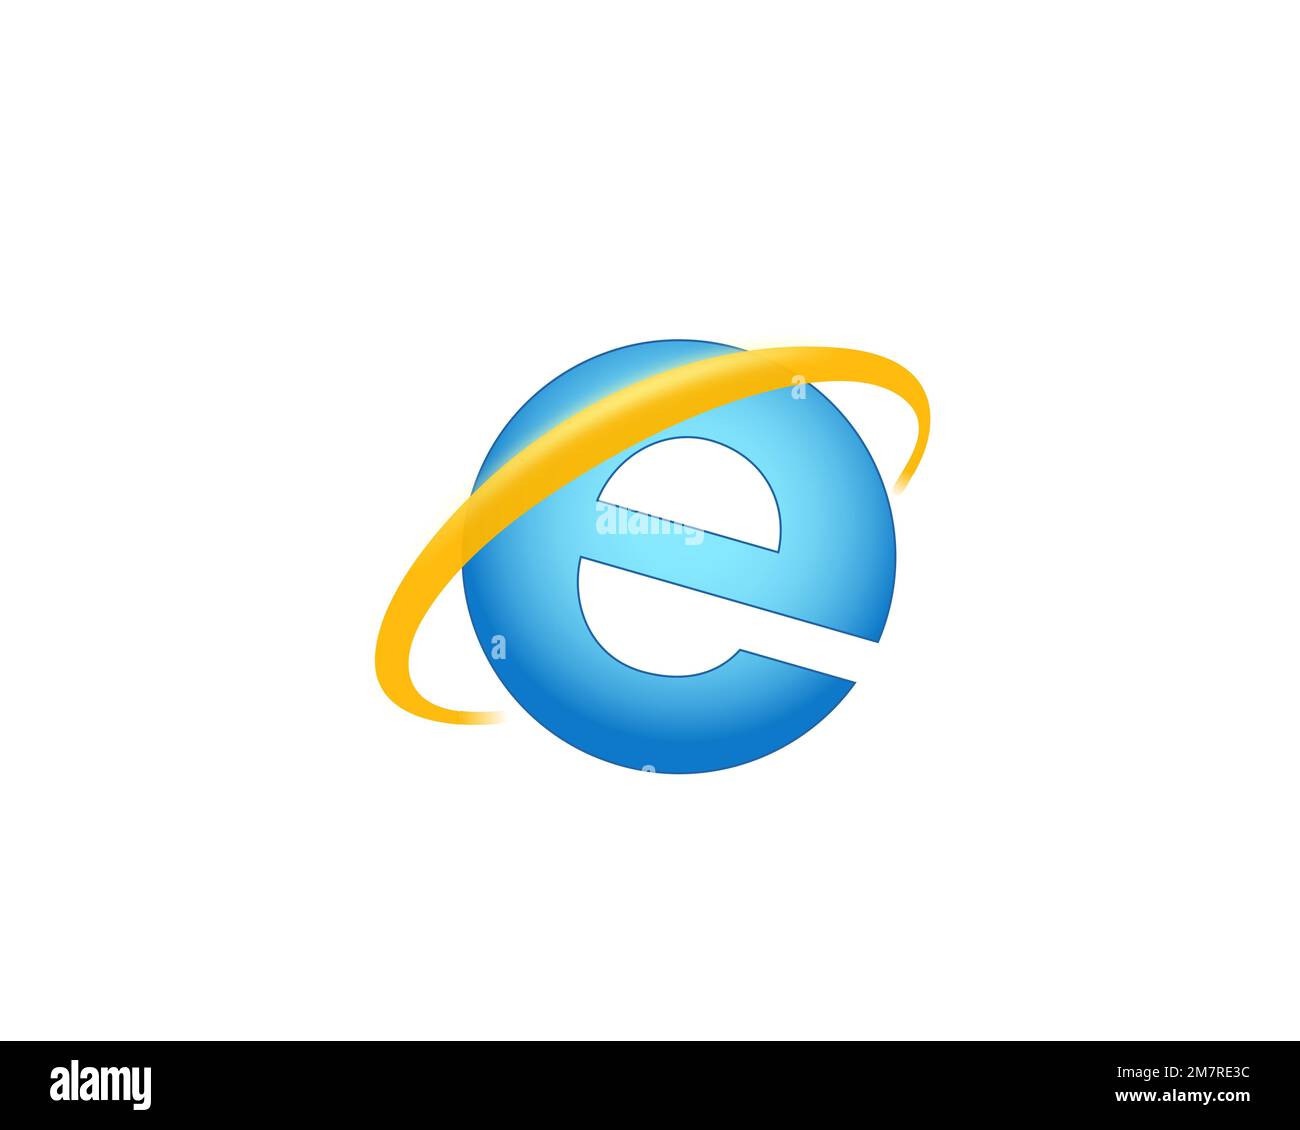 Internet Explorer, rotated logo, white background B Stock Photo - Alamy